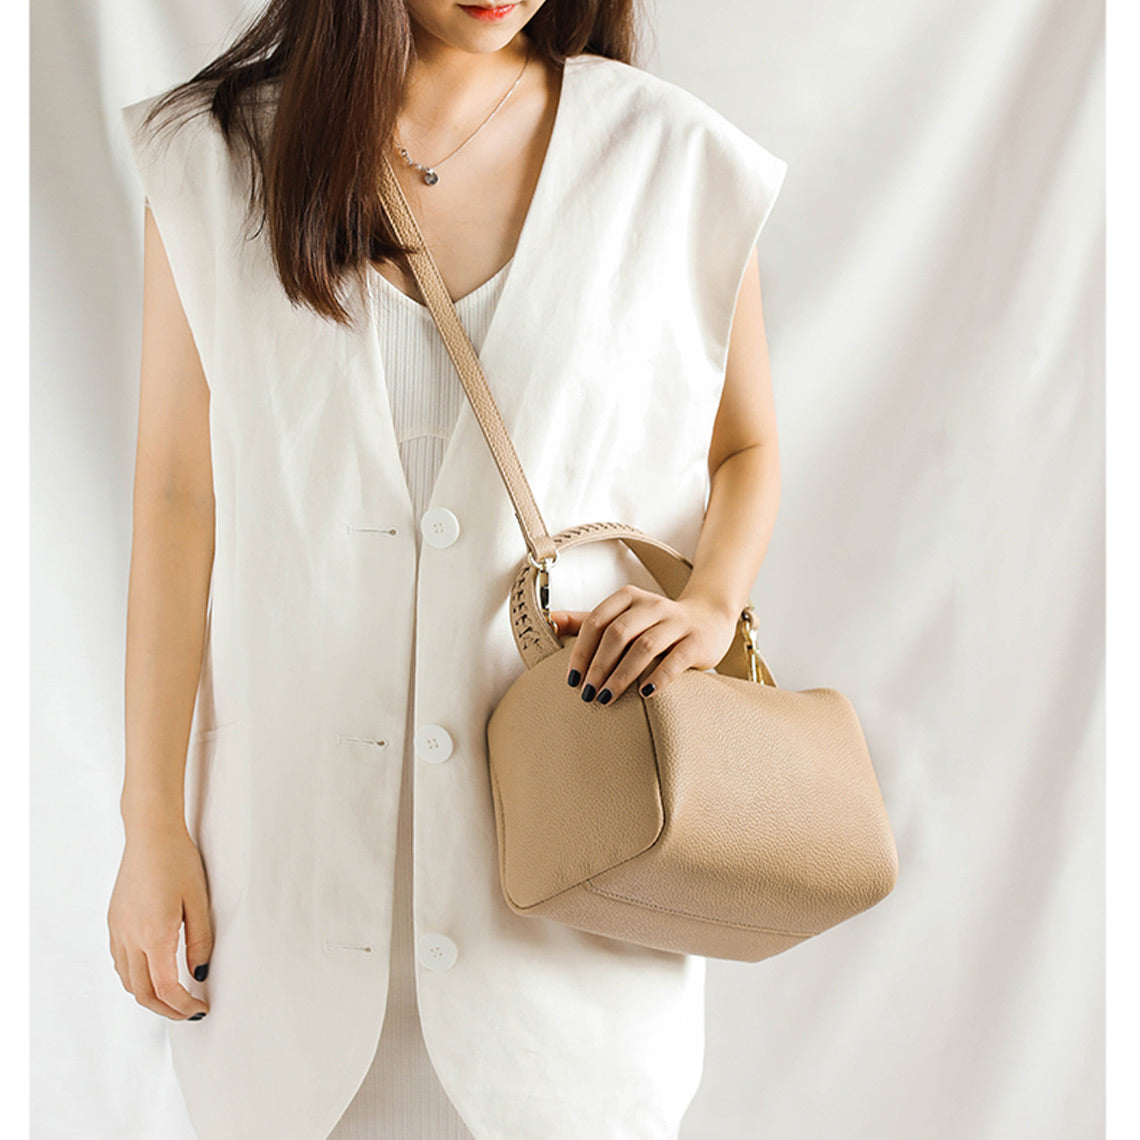 POPSEWING® Top Grain Leather Design Pillow Bag DIY Kit